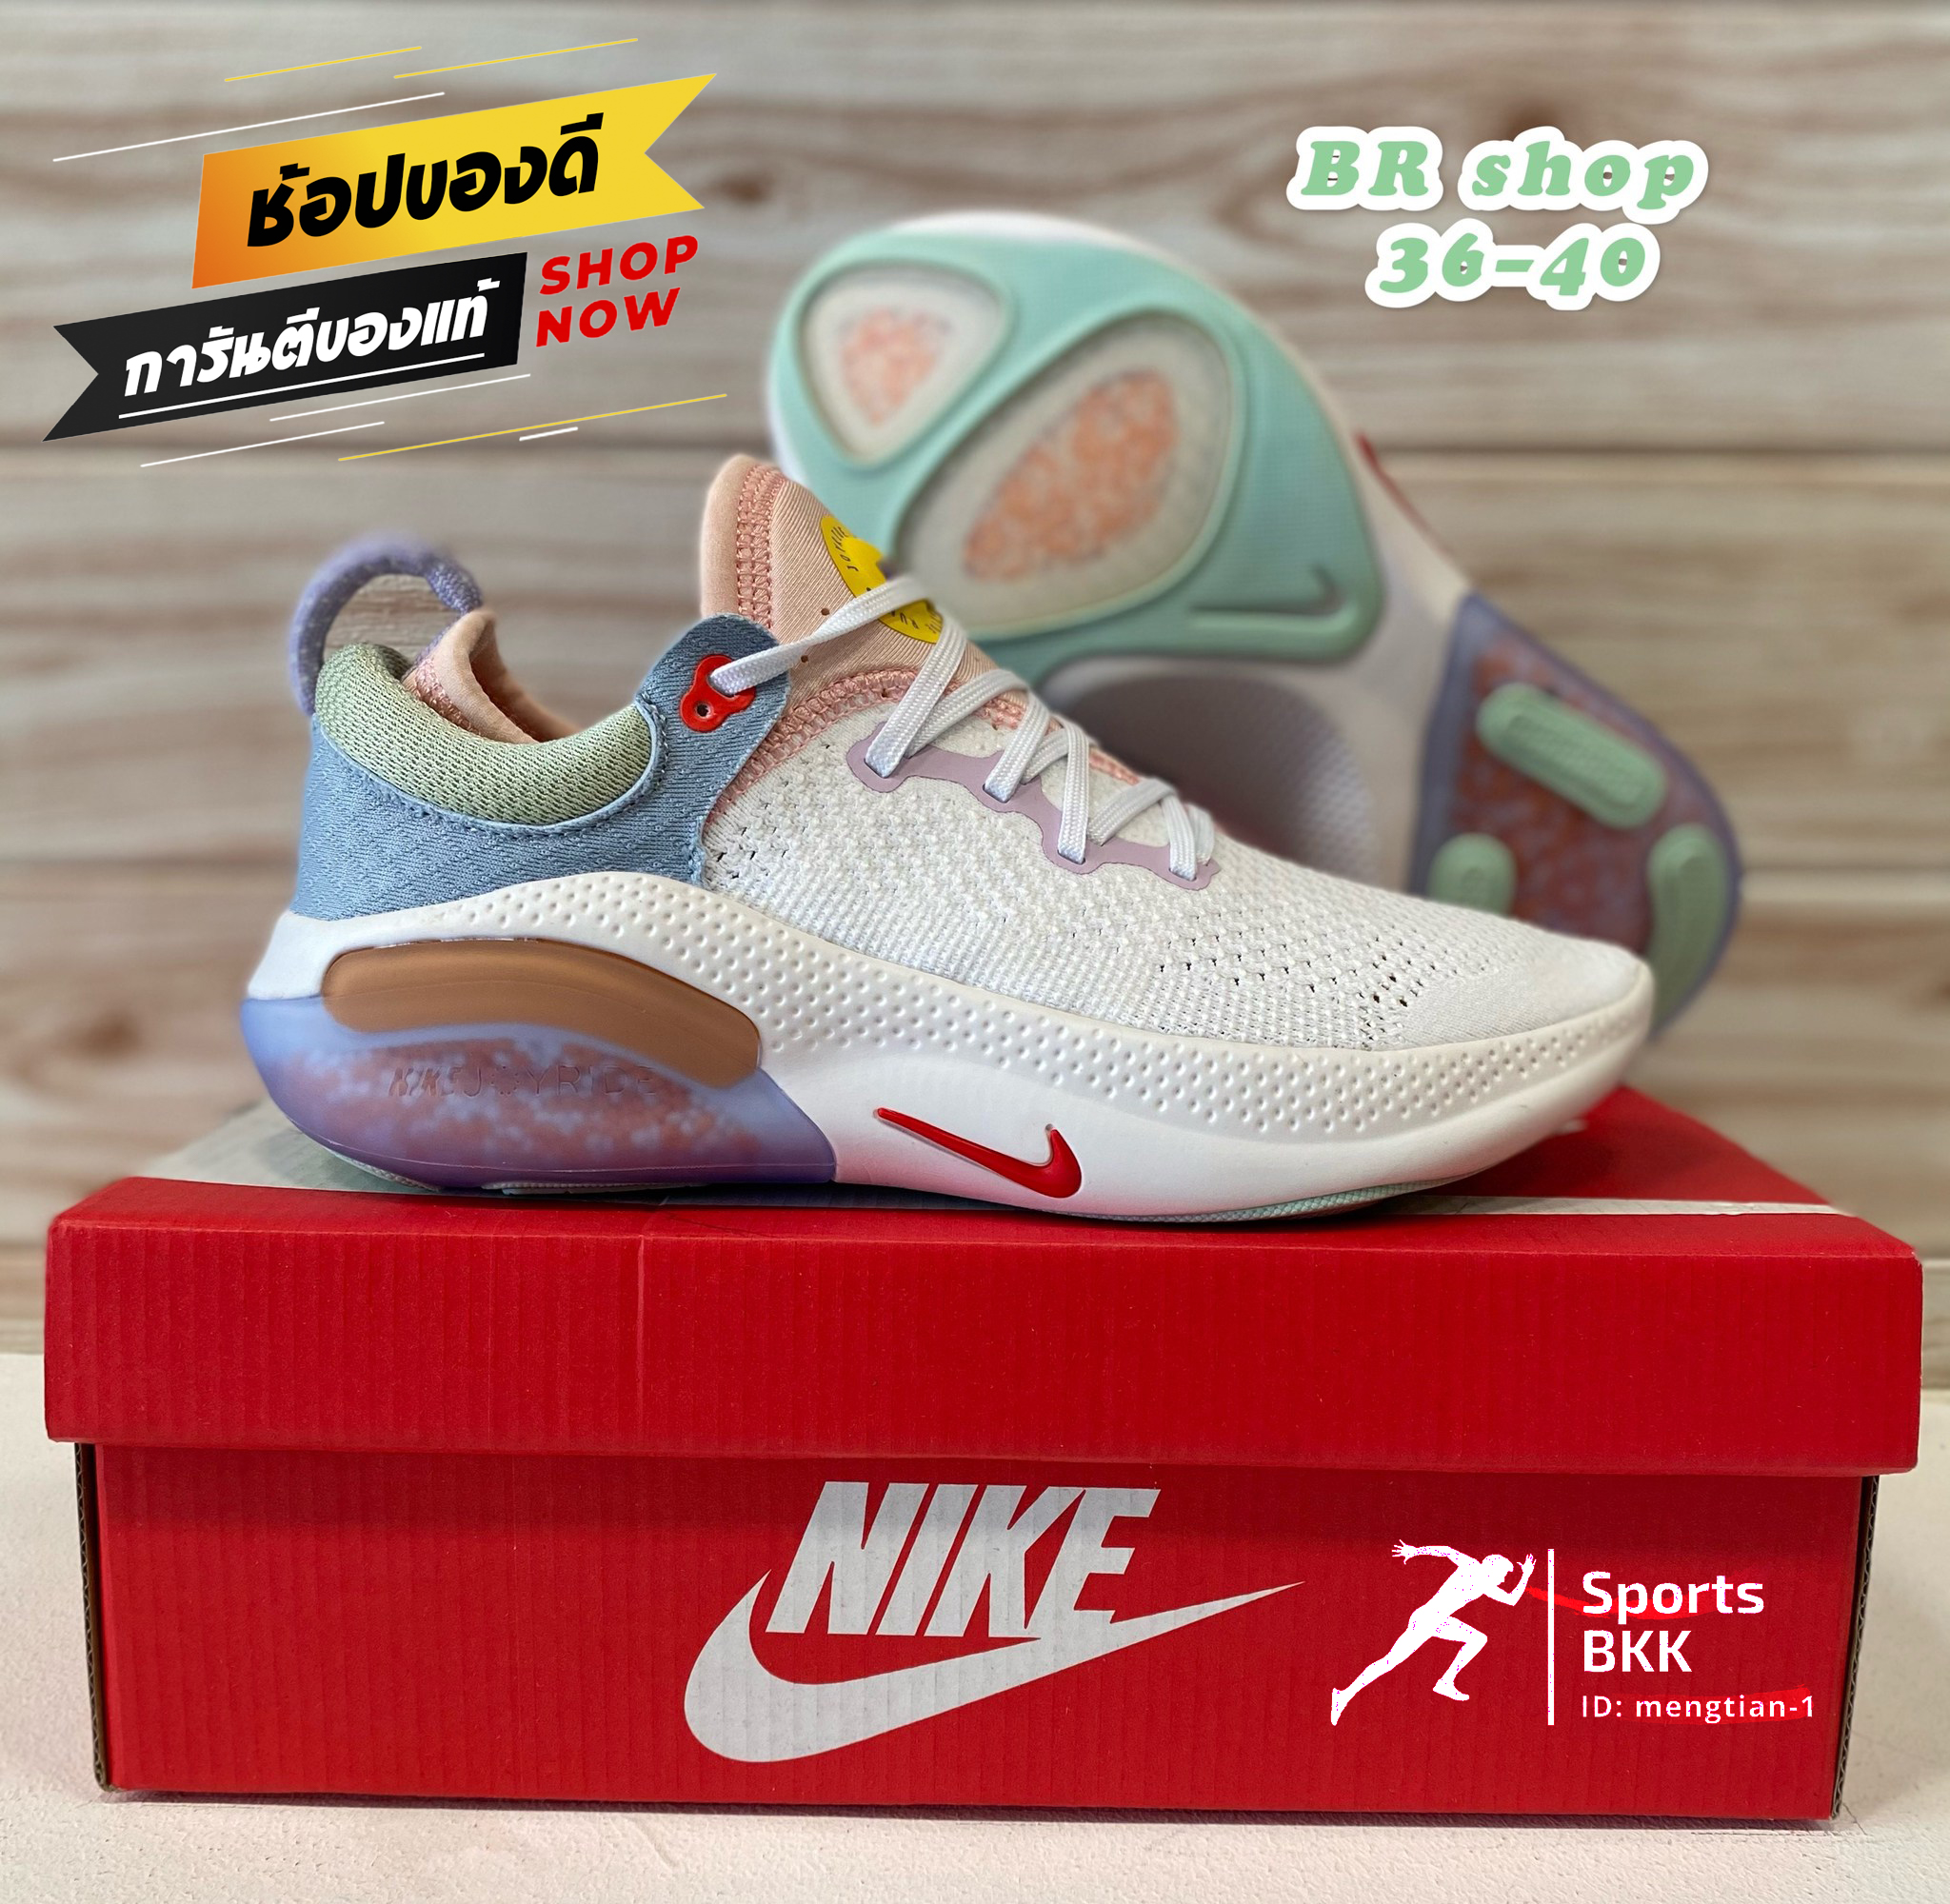 [Sports BKK] รองเท้าวิ่งNike Joyride Run Flyknit size:36-45 "ขาวพาสเทล" (+เพิ่ม 1 size) รองเท้าวิ่ง รองเท้าออกกำลังกาย รองเท้าวิ่งมาราธอน (อุปกรณ์ครบเซทพร้อมกล่อง